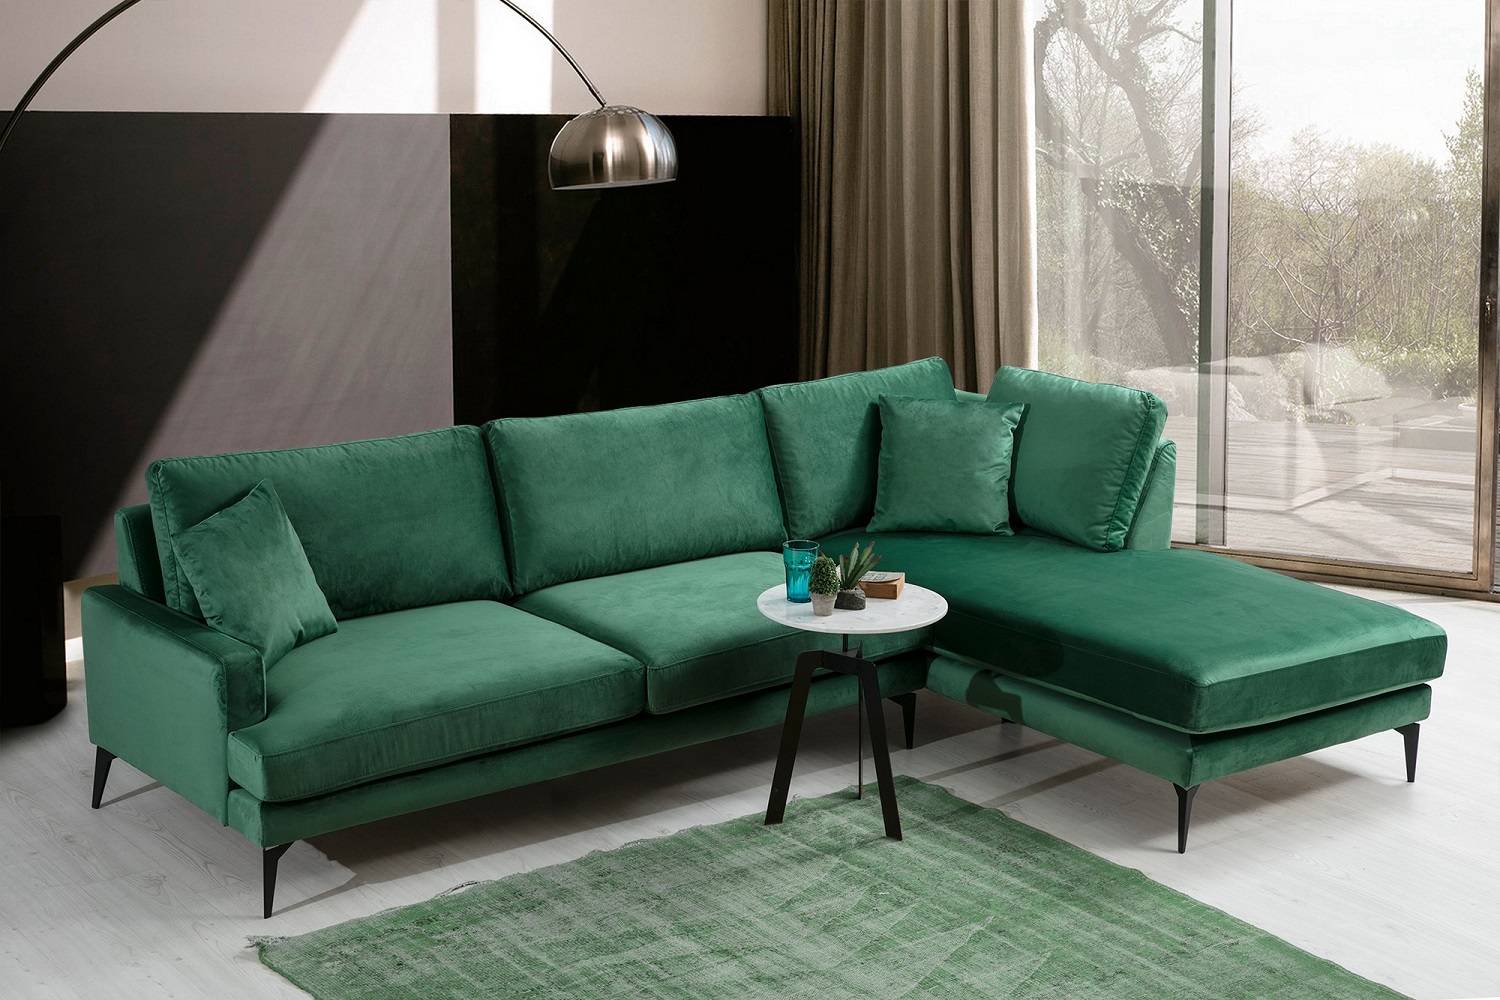 dizajnova-rohova-sedacka-fenicia-283-cm-zelena-prava-1